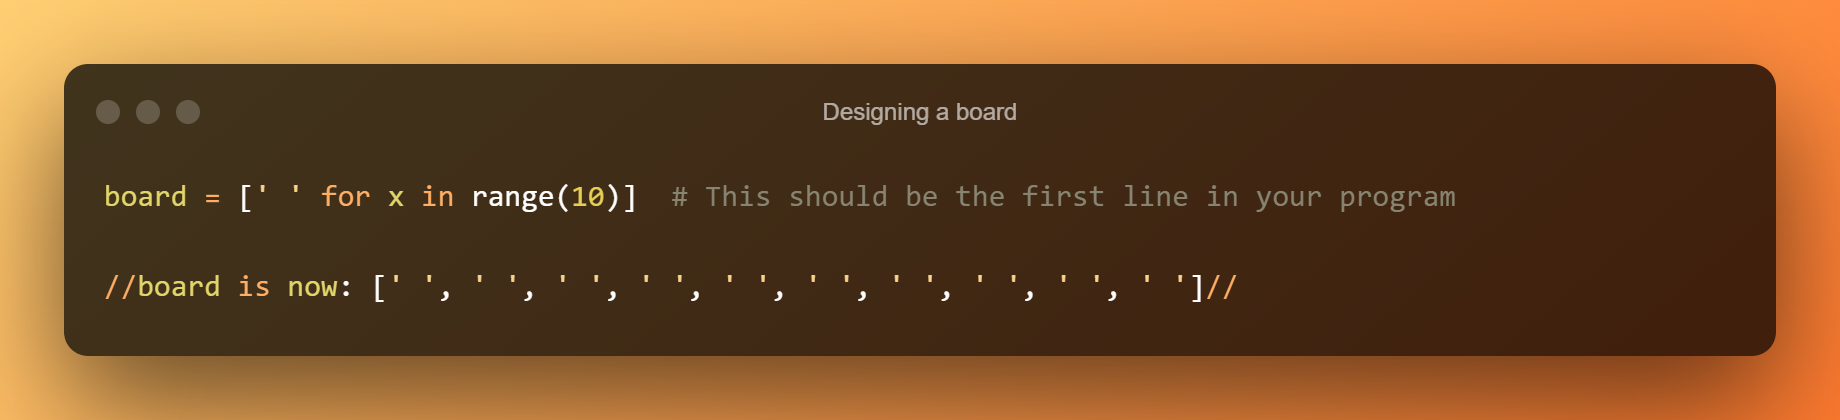 Designing A Board